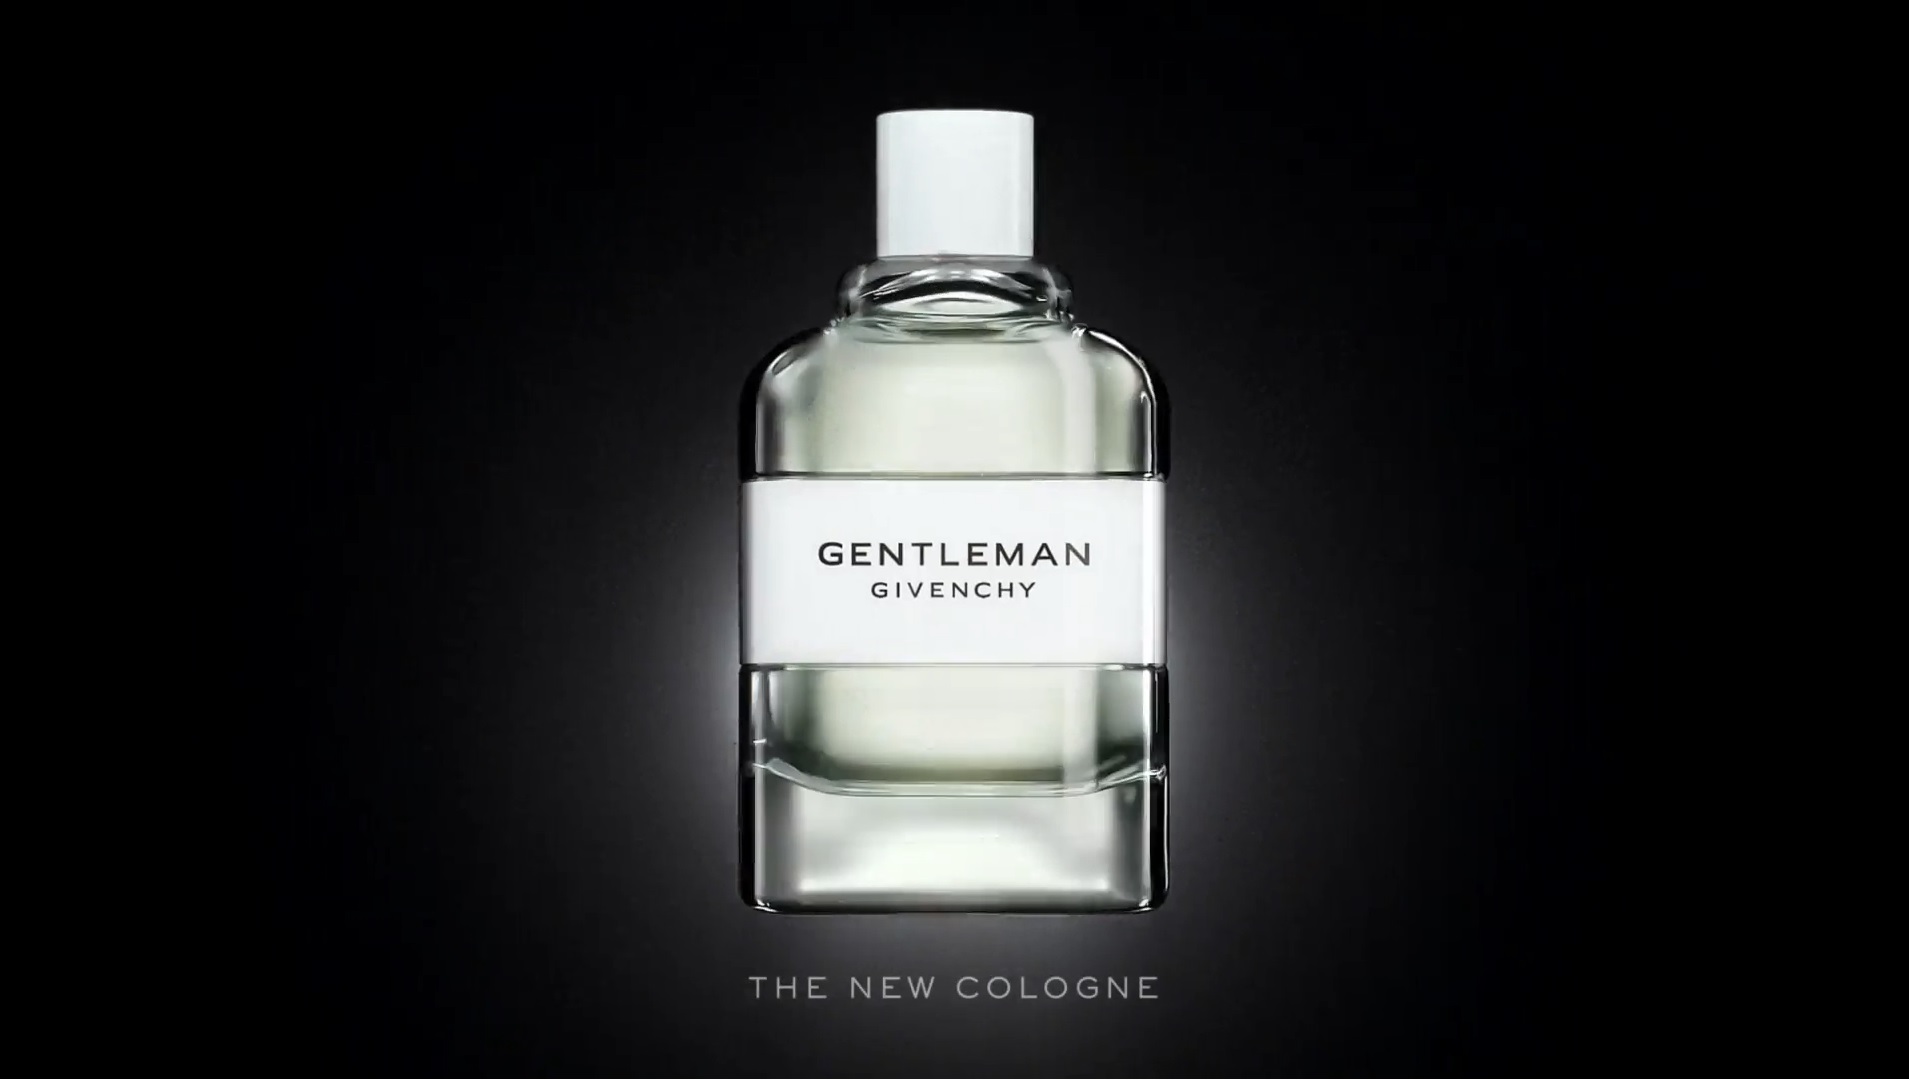 Живанши мужские летуаль. Одеколон Givenchy Gentleman Cologne. Dior homme Cologne. Одеколон Gentleman 10. EDC Gentleman.